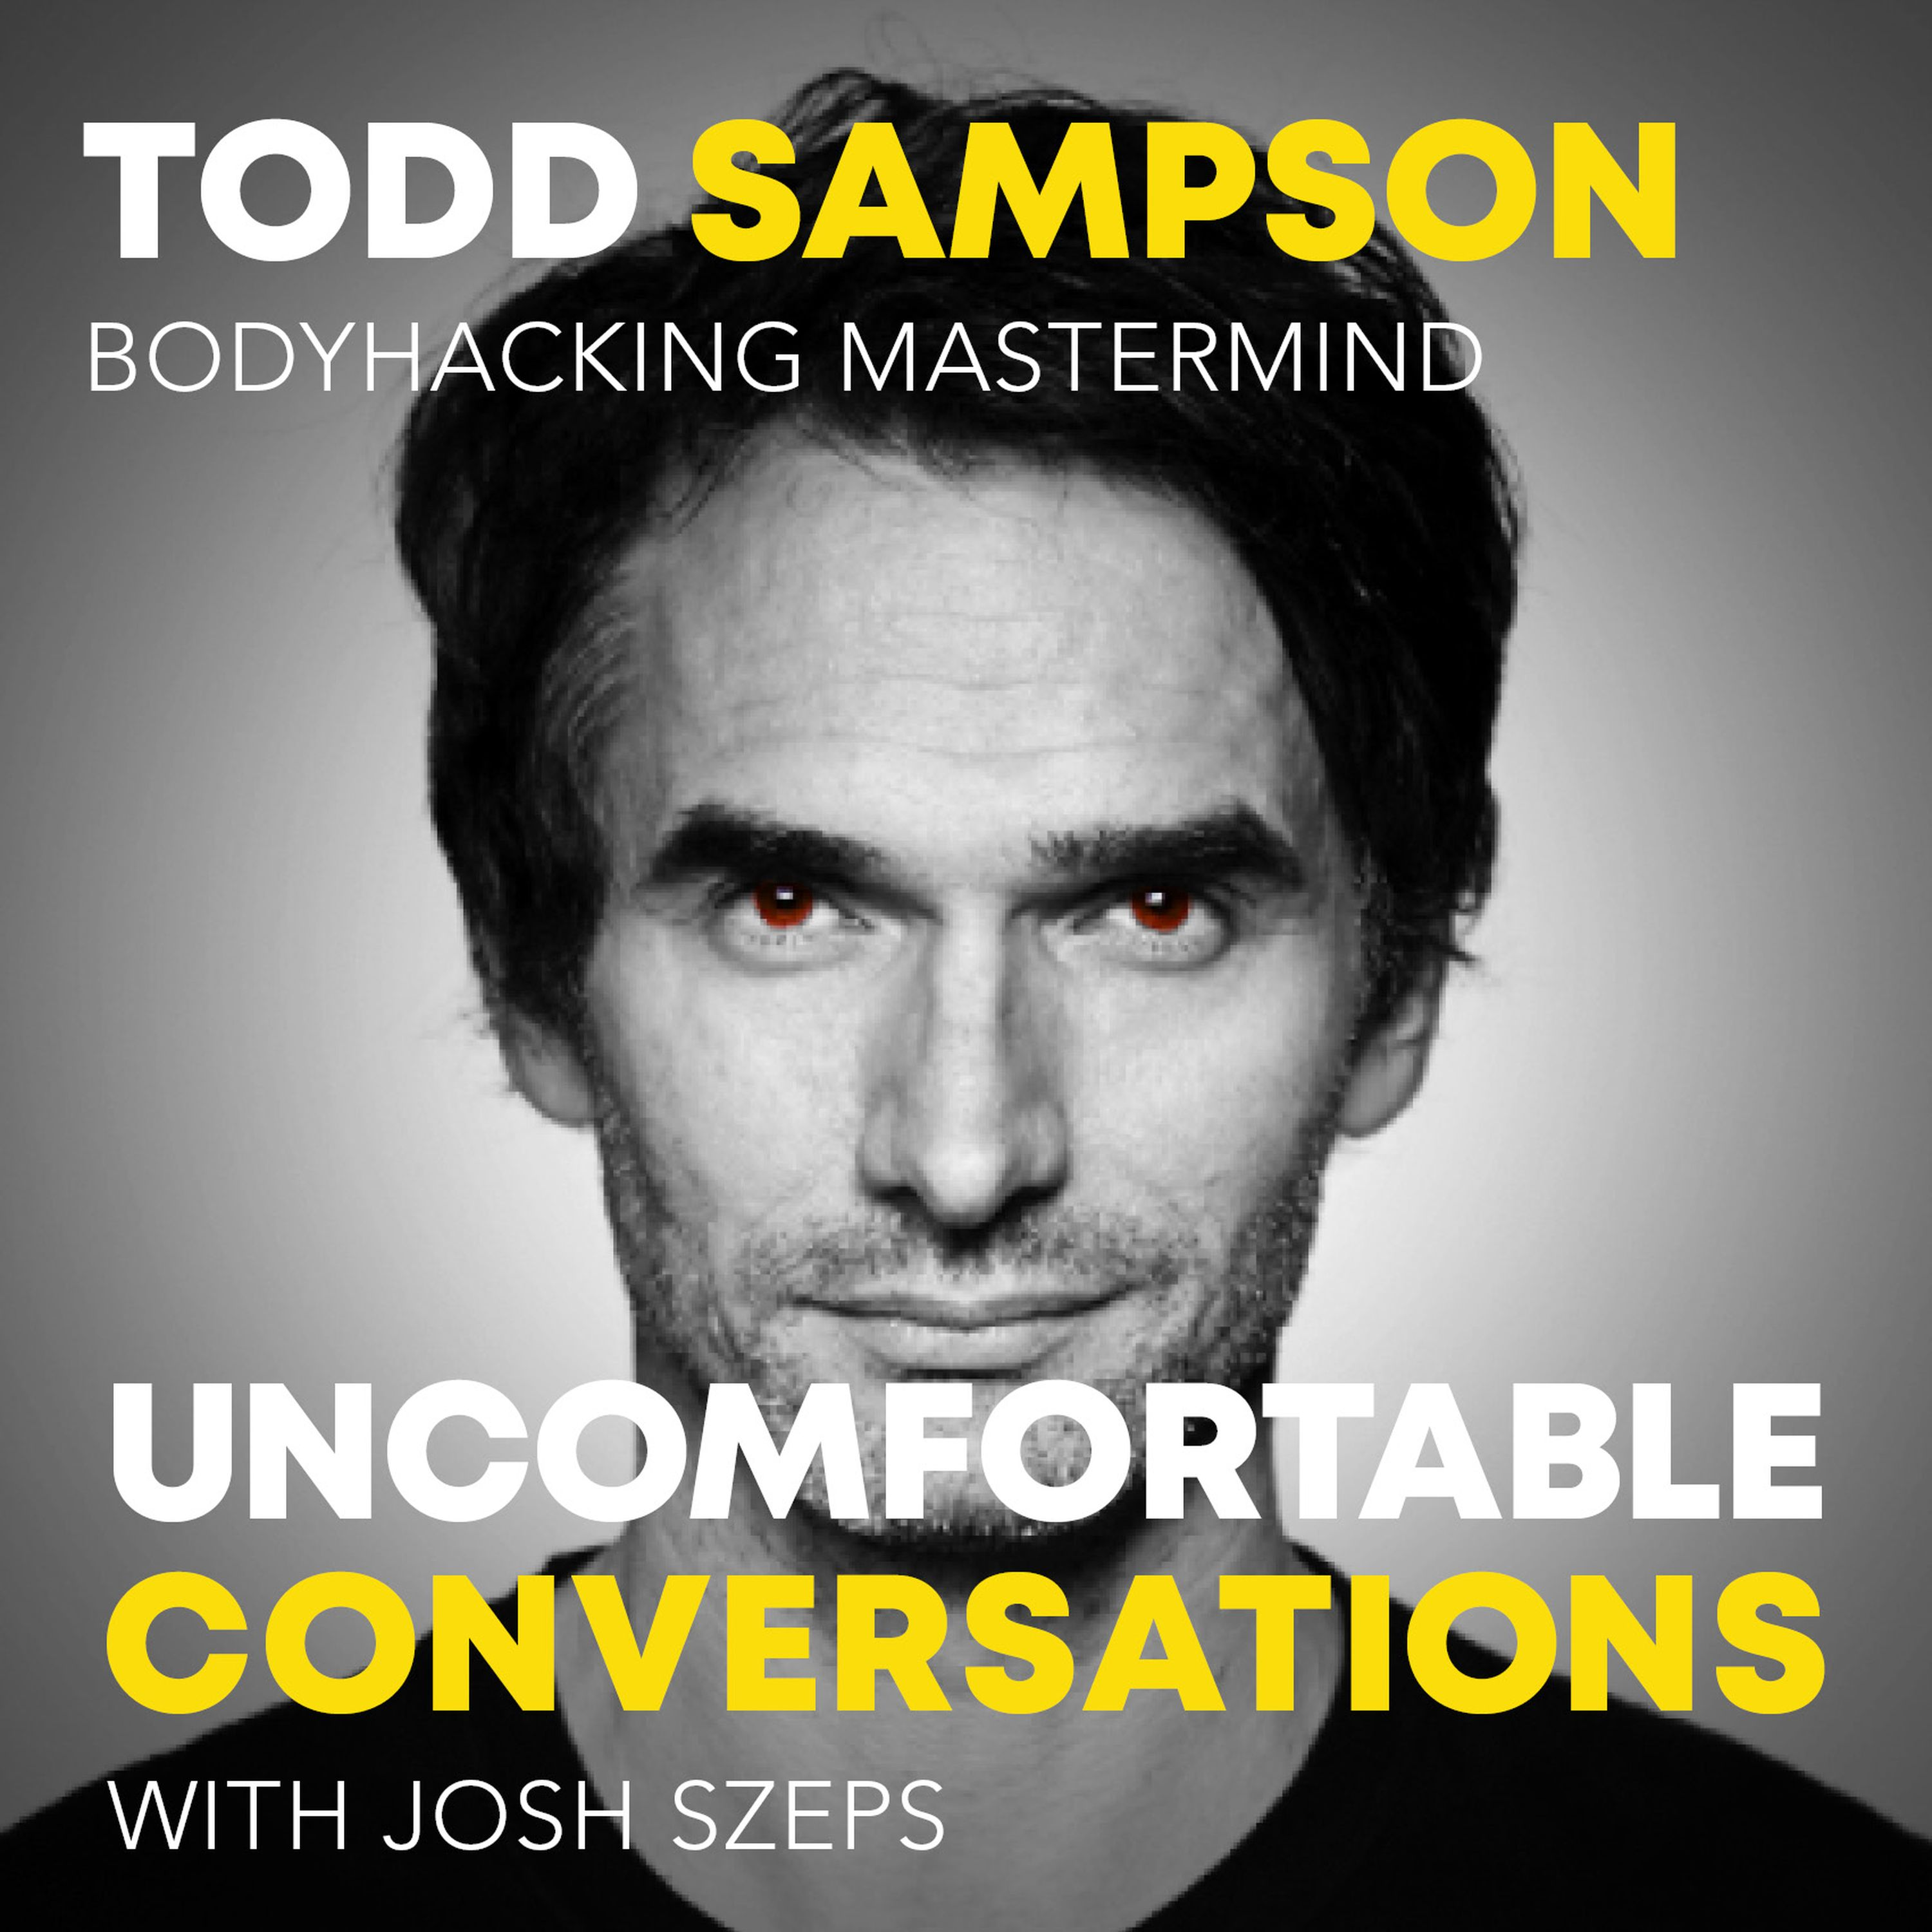 Todd Sampson - Bodyhacking Mastermind